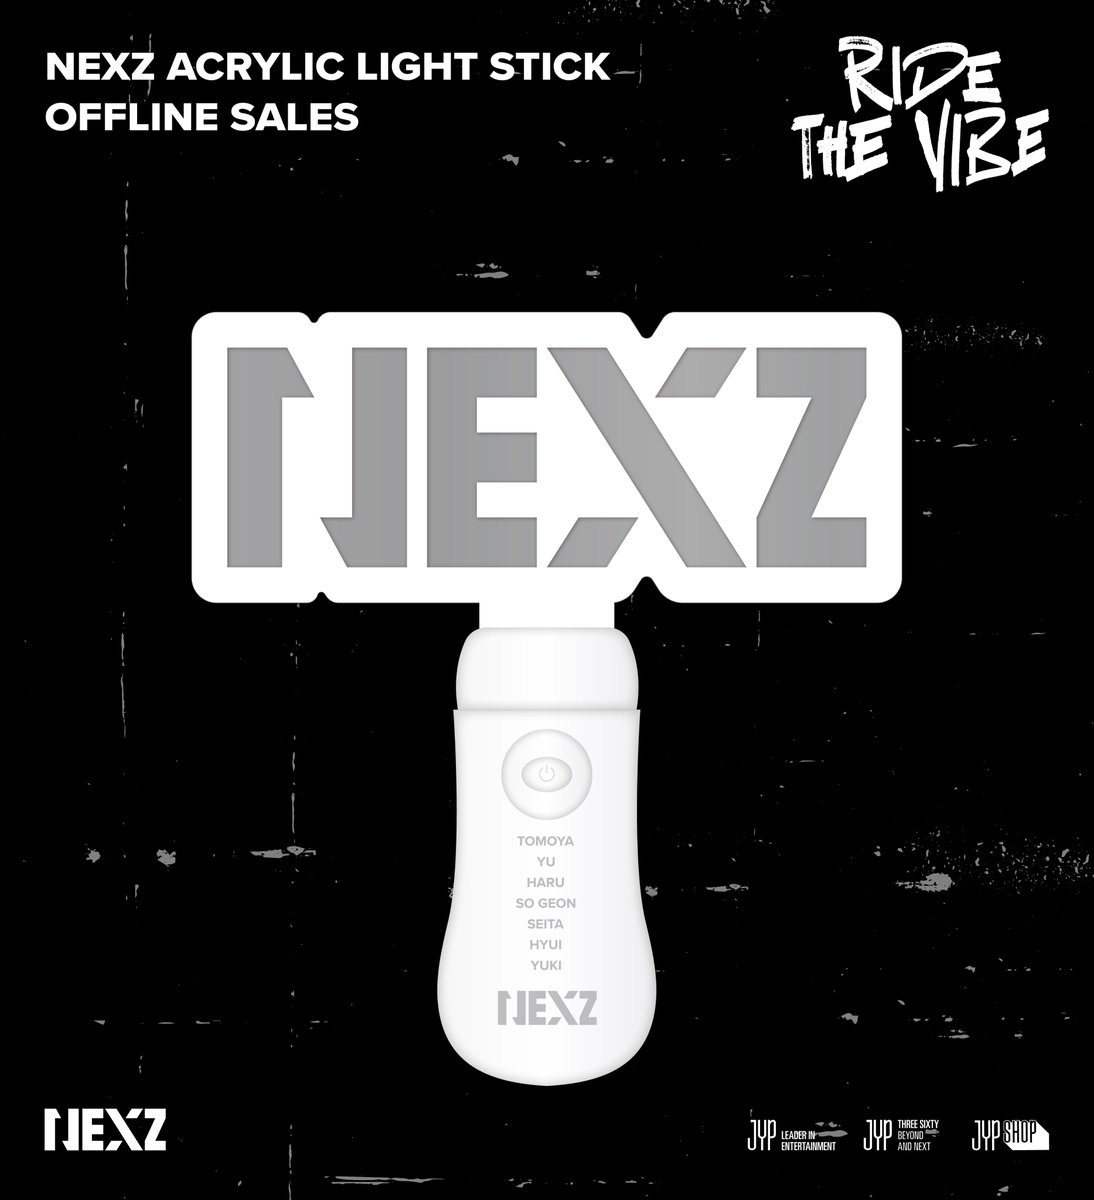 NEXZ ACRYLIC LIGHT STICK Sales Booth Information 응원봉 현장판매 부스 운영 안내🔽 bit.ly/3QNd3VI 💿YES24 LIVE HALL #NEXZ #넥스지 #ネクスジ #RidetheVibe #NEXZ_RidetheVibe #NEXZ_RTV #RTV #NEXZ_RidetheVibe_Debut #AcrylicLightStick